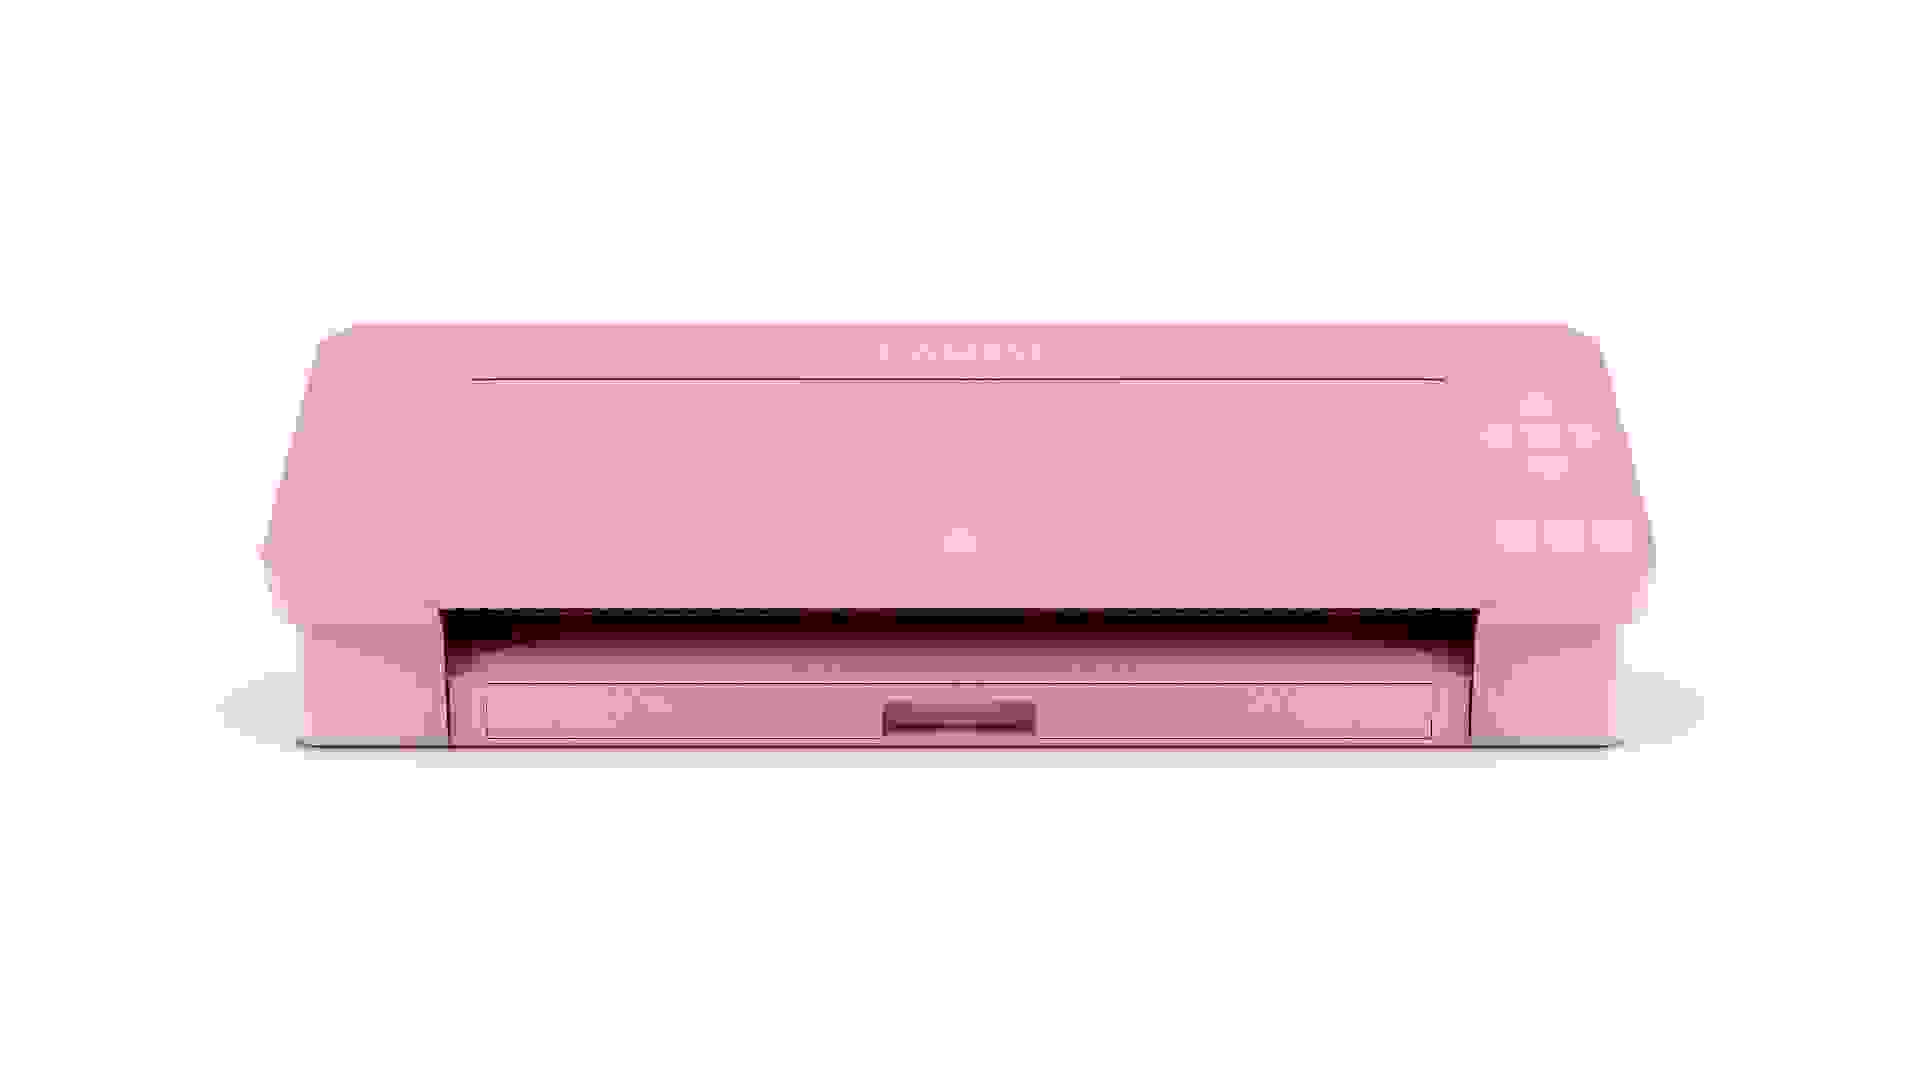 Silhouette Cameo 4 Vinyl Cutting Machine, Pink